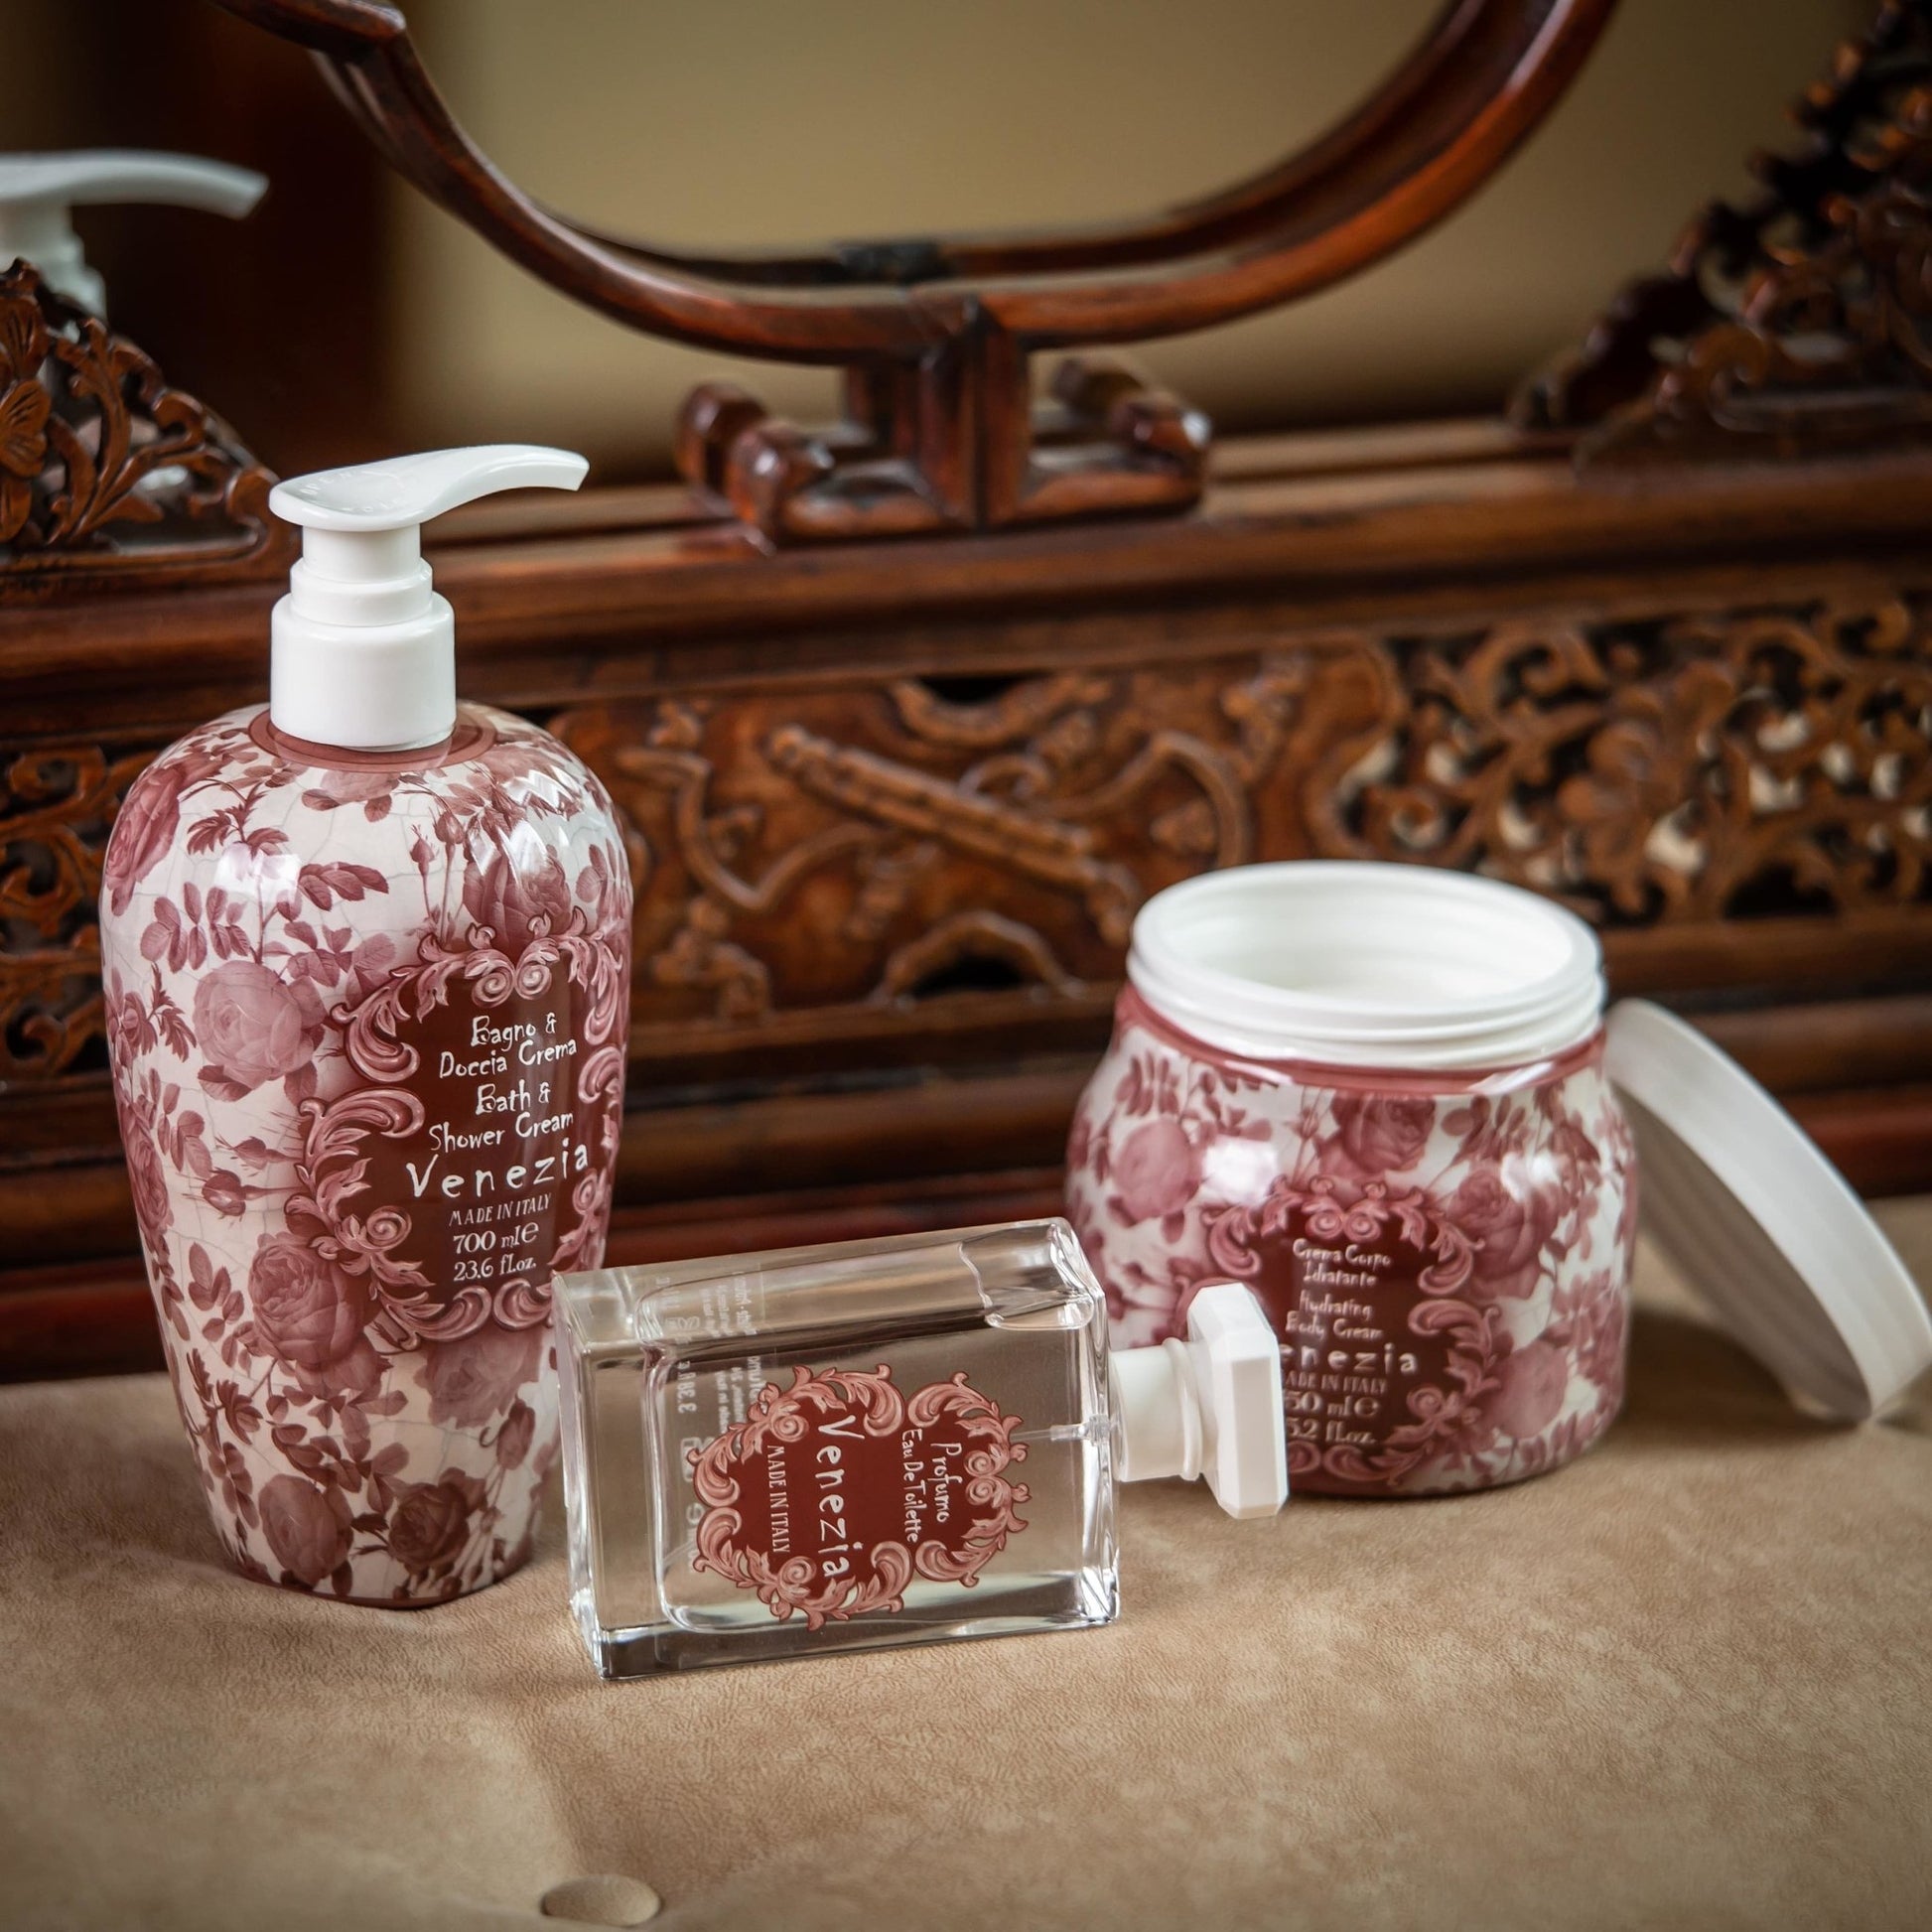 Delicate Bath and Shower Gel VENEZIA 700 ML - |VESIMI Design| Luxury and Rustic bathrooms online